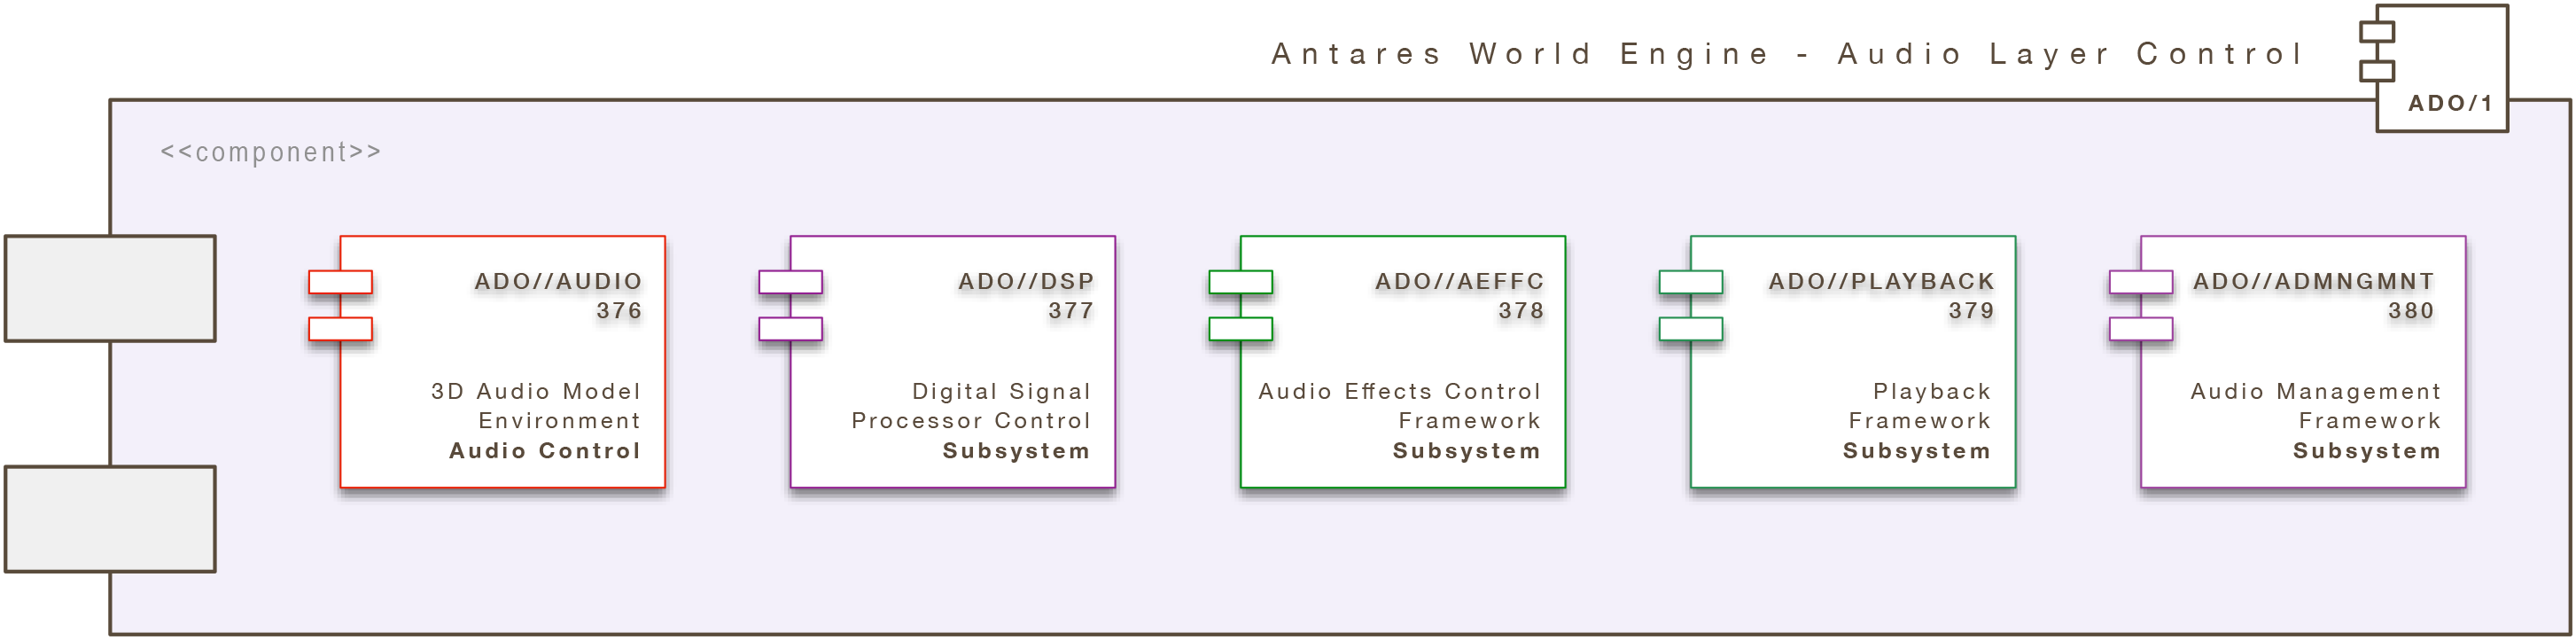 Antares World Engine (Core): Audio Layer Control (AWE/ADO)